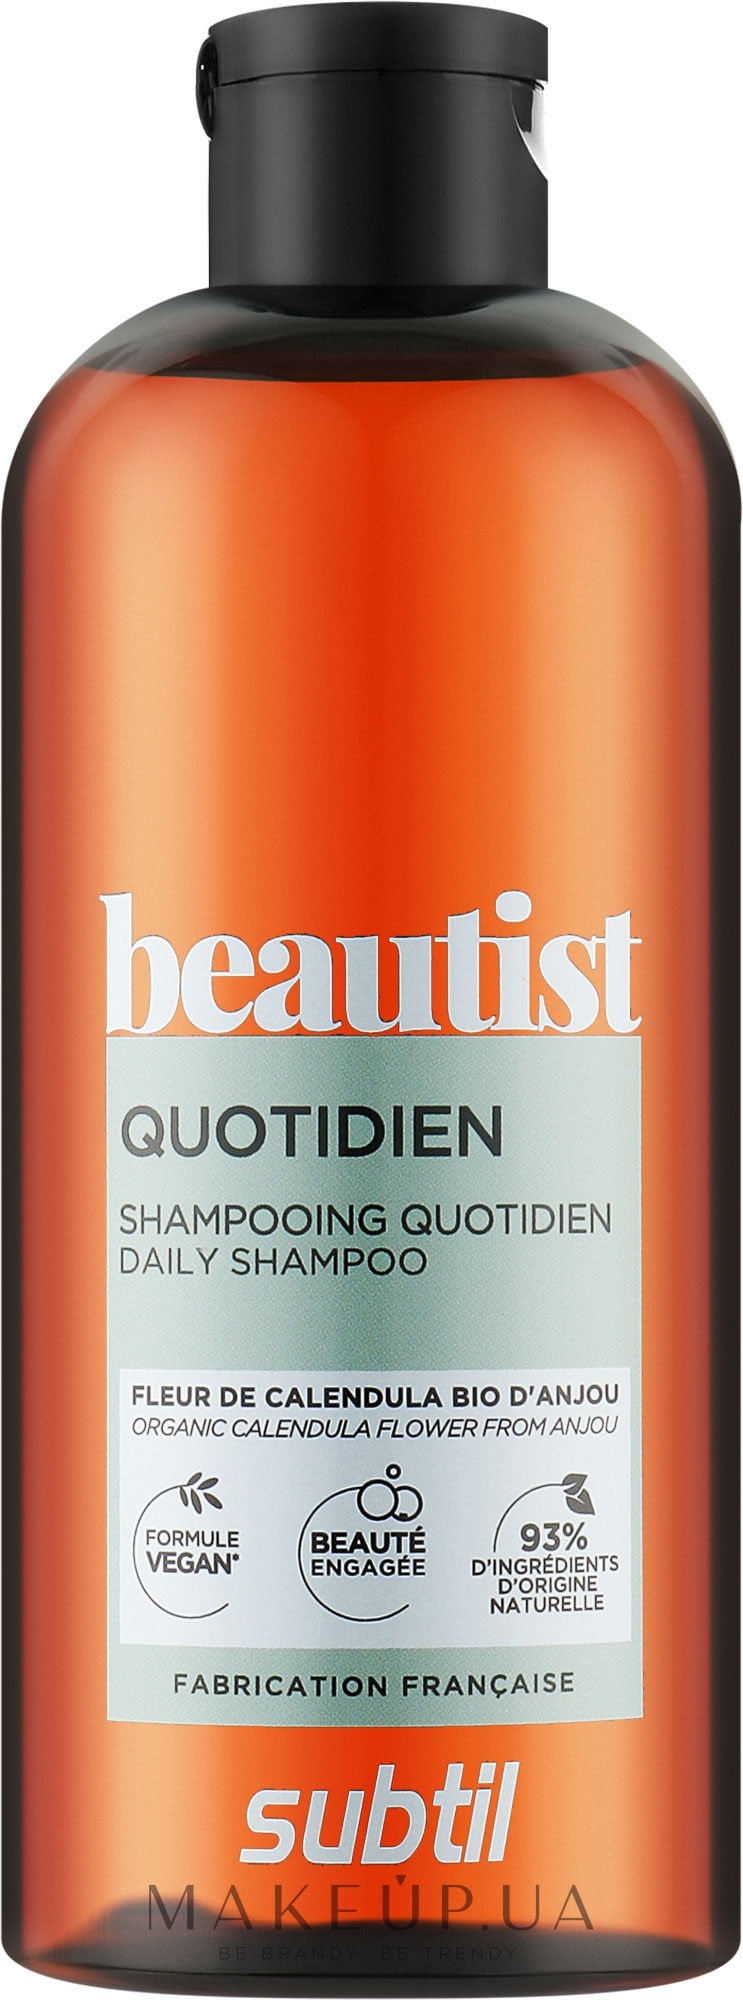 Щоденний шампунь для волосся - Laboratoire Ducastel Subtil Beautist Daily Shampoo — фото 300ml